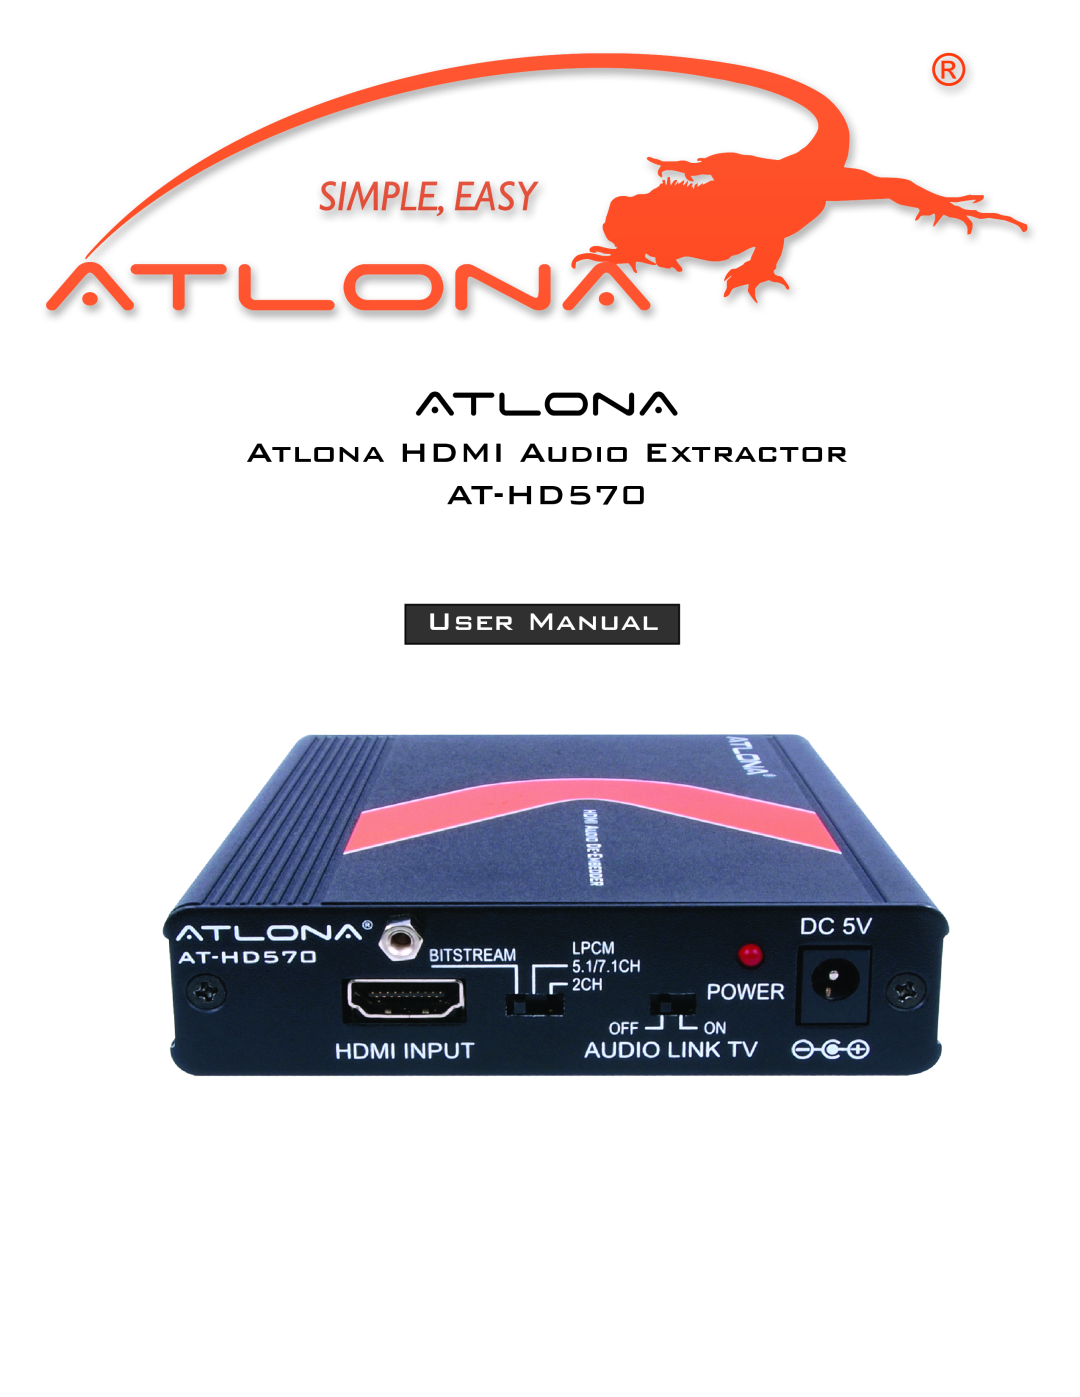 Atlona AT-HD570 user manual atlona.com, Atlona HDMI Audio De-Embedder and Converter, User Manual 